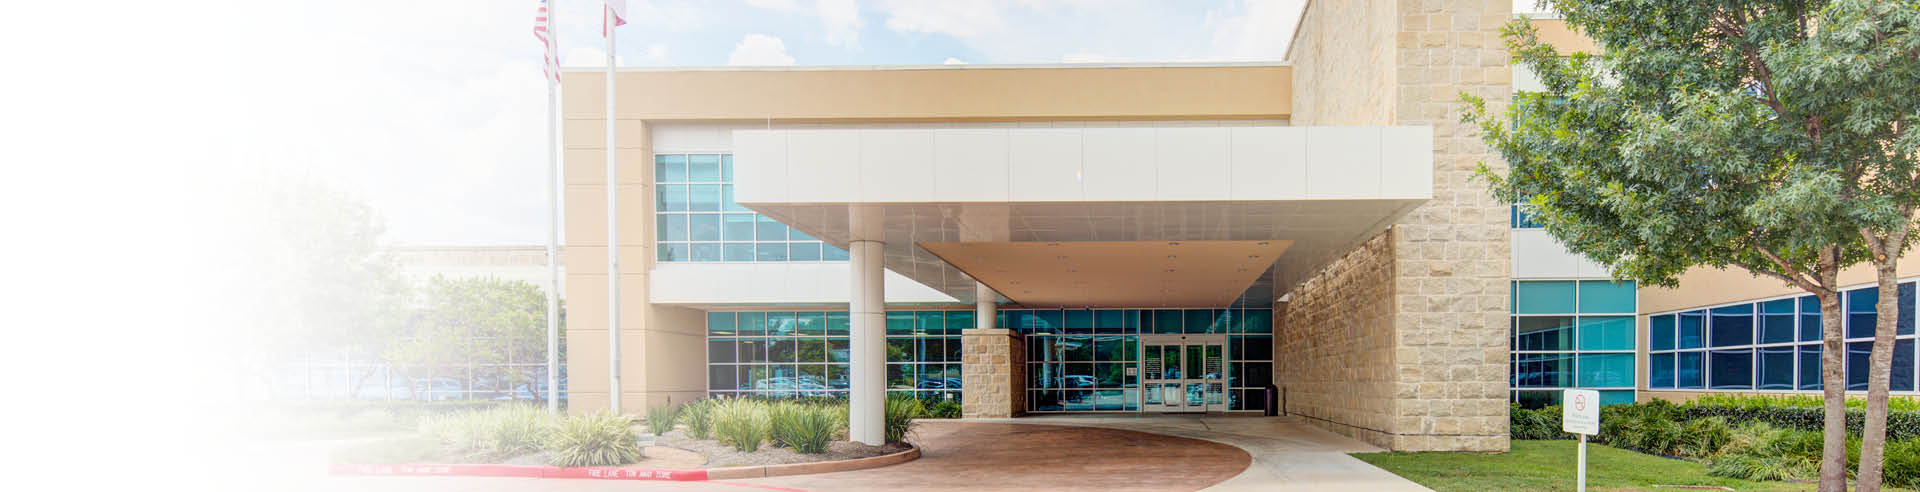 Encompass Health Rehabilitation Hospital of Austin exterior image